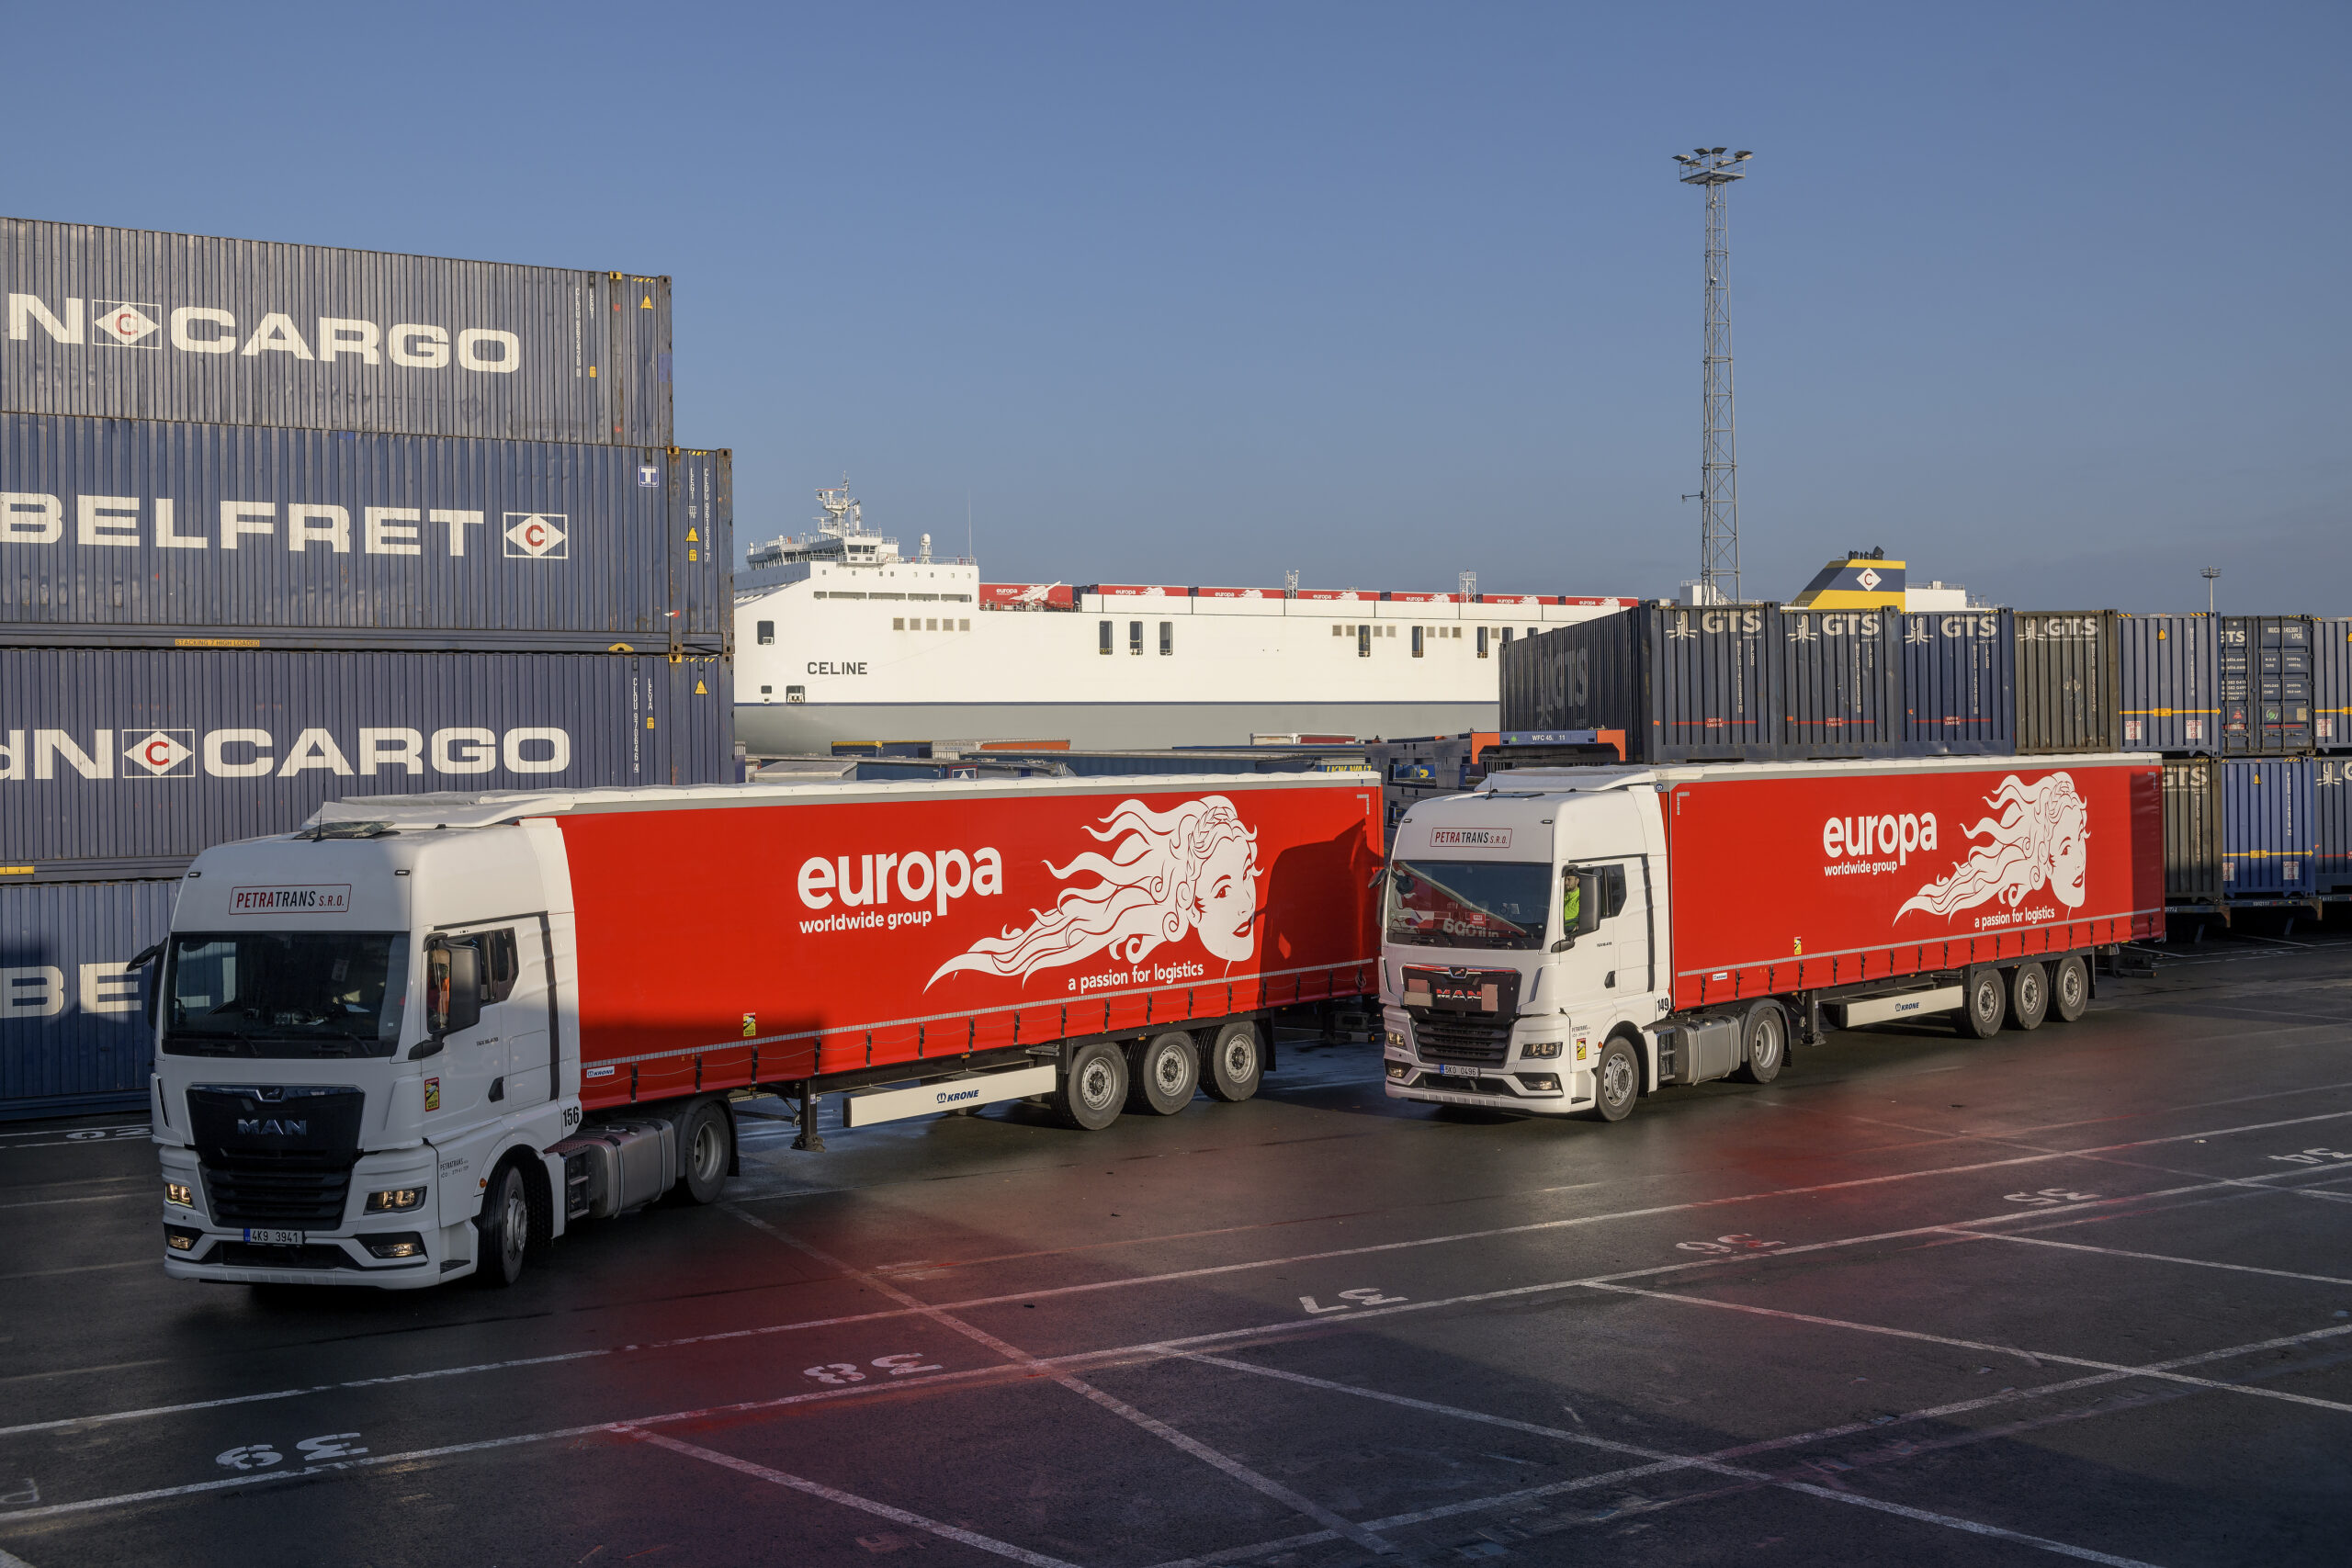 Europa trucks at Belgium port 